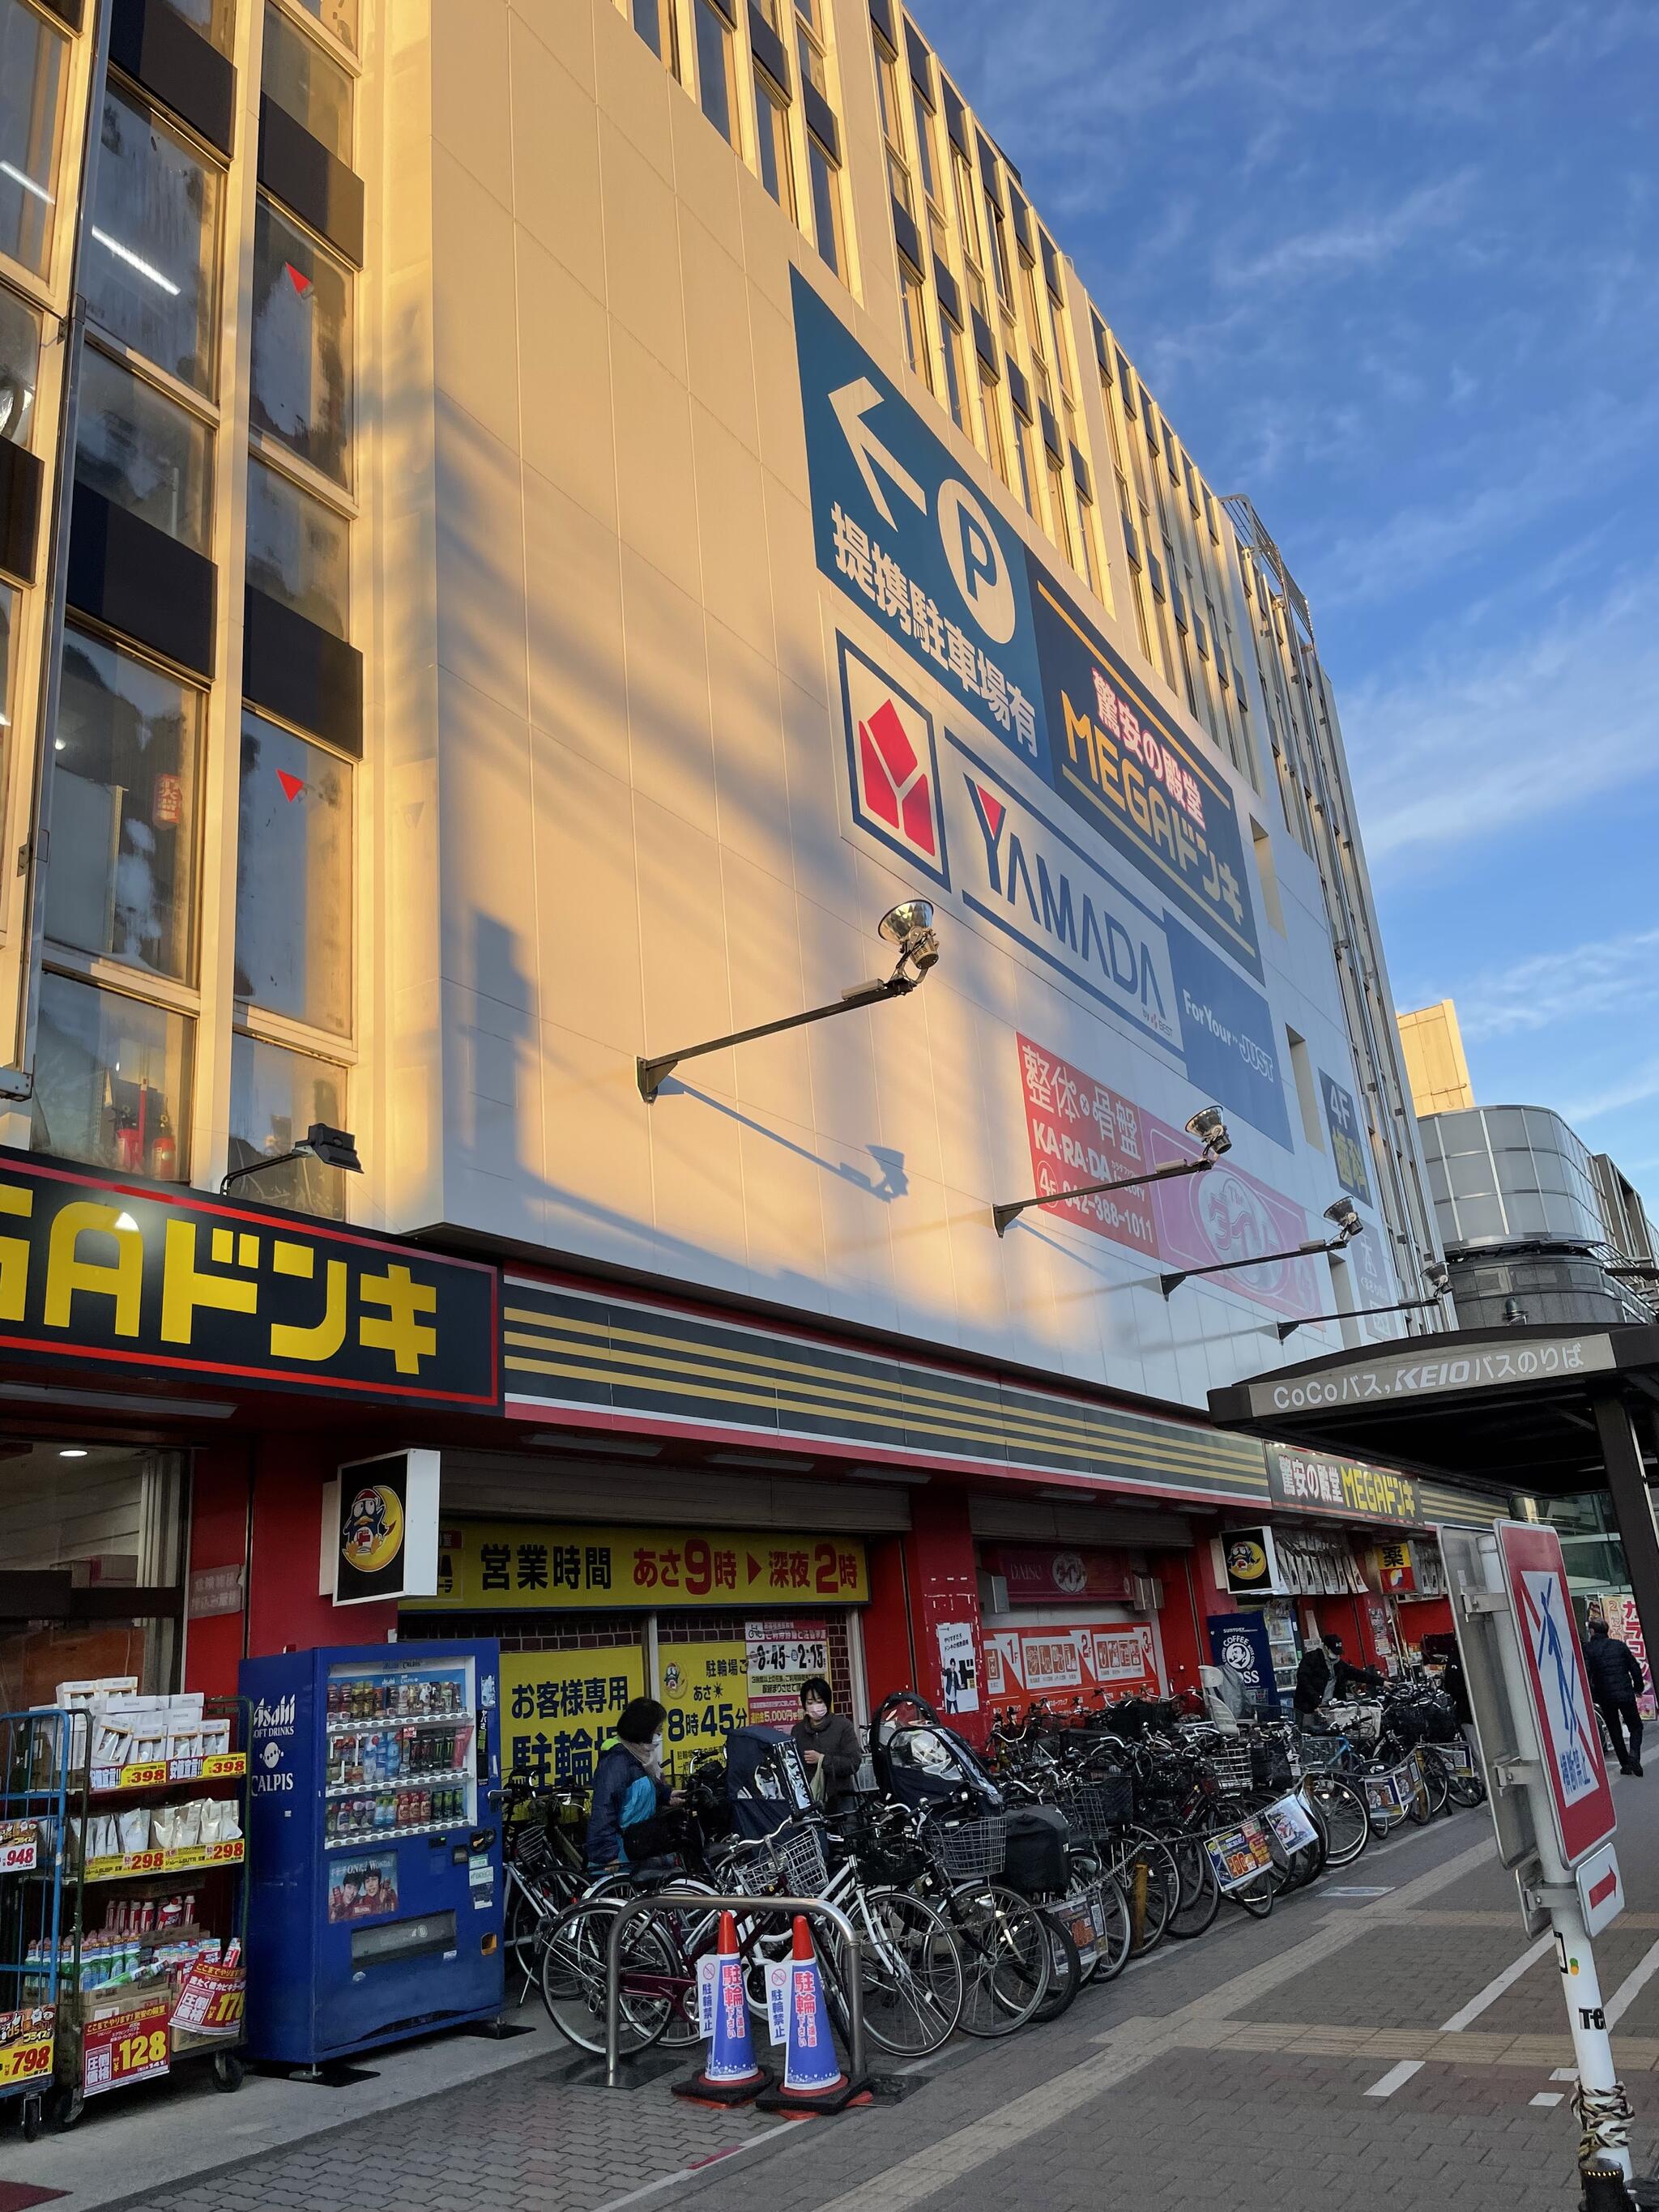 MEGAドン・キホーテ 武蔵小金井駅前店の代表写真1